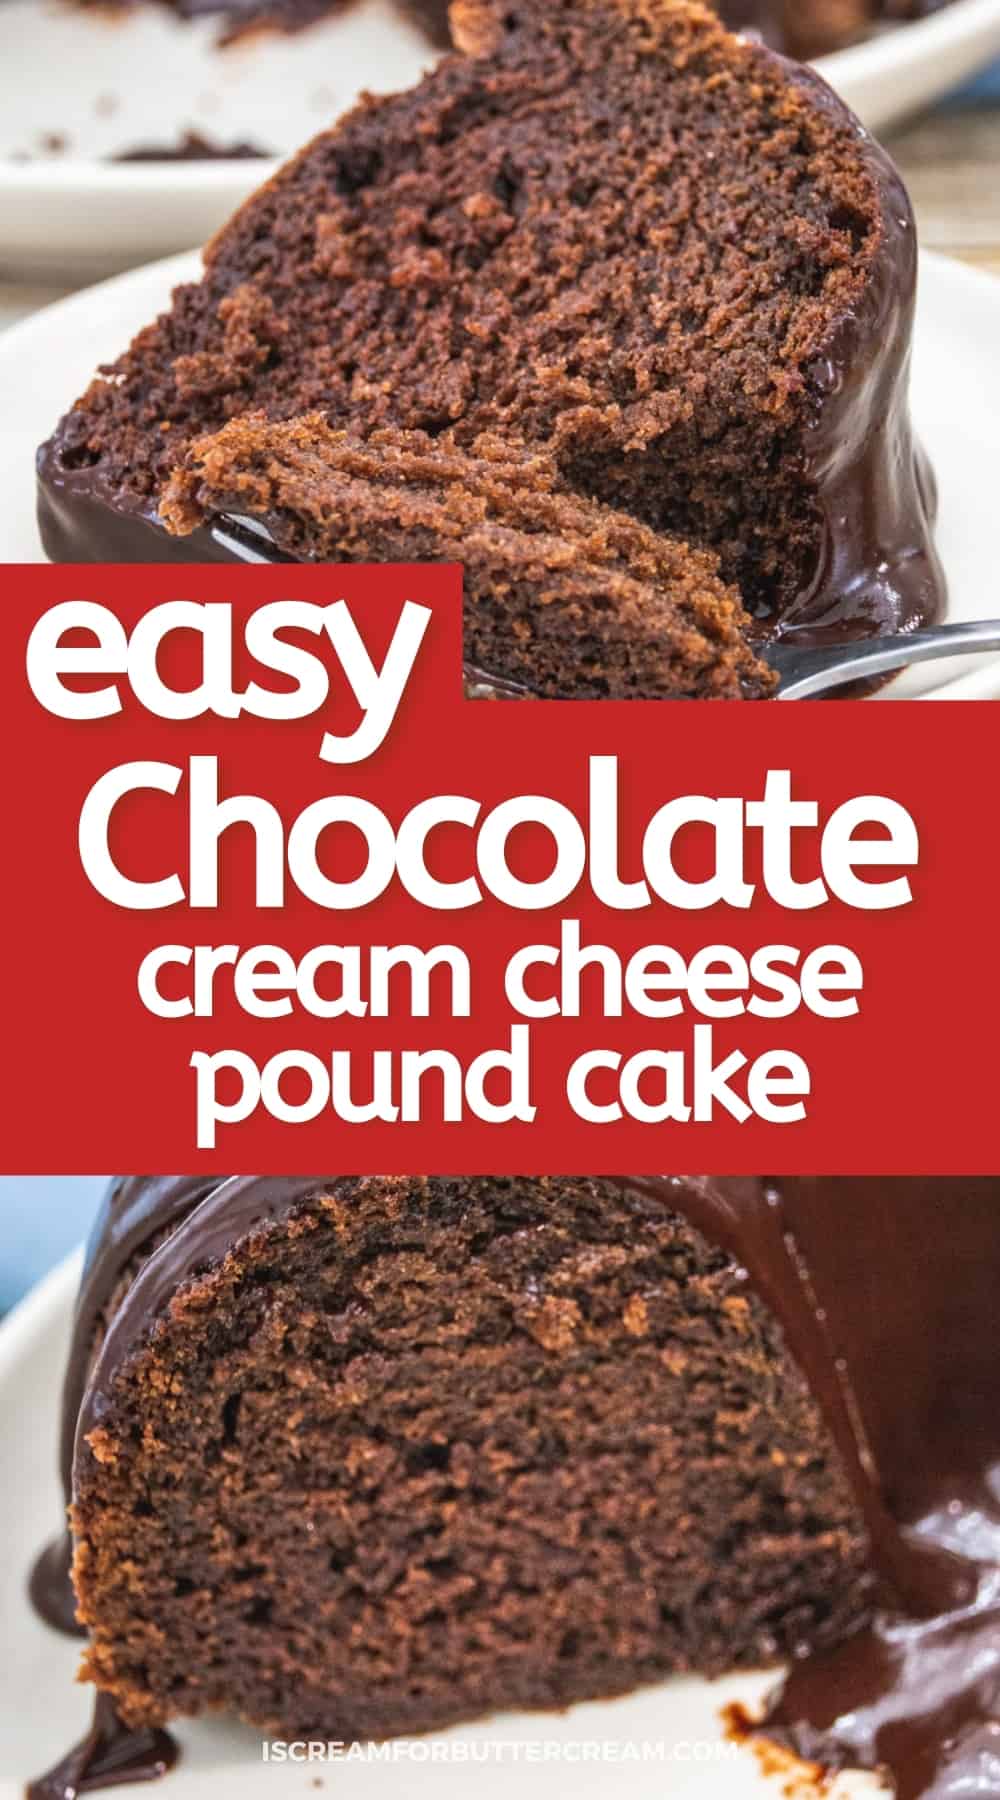 chocolate pound cake pin graphic